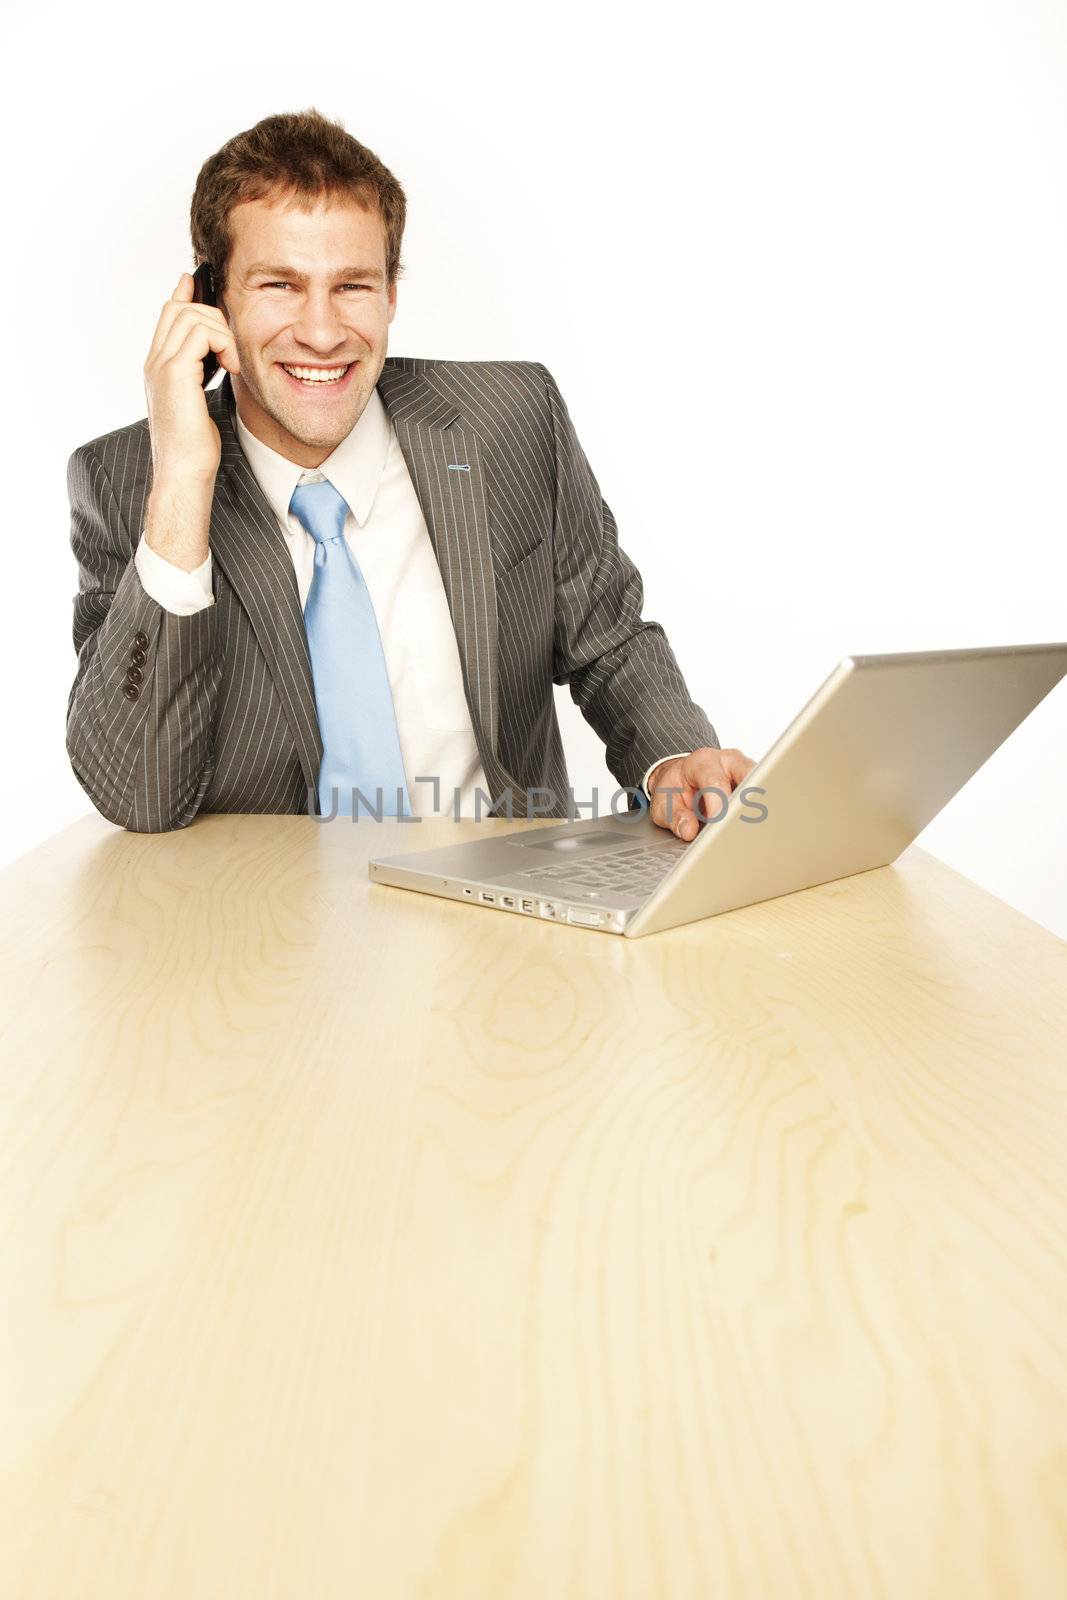 Smiling customer service operator. Over white background